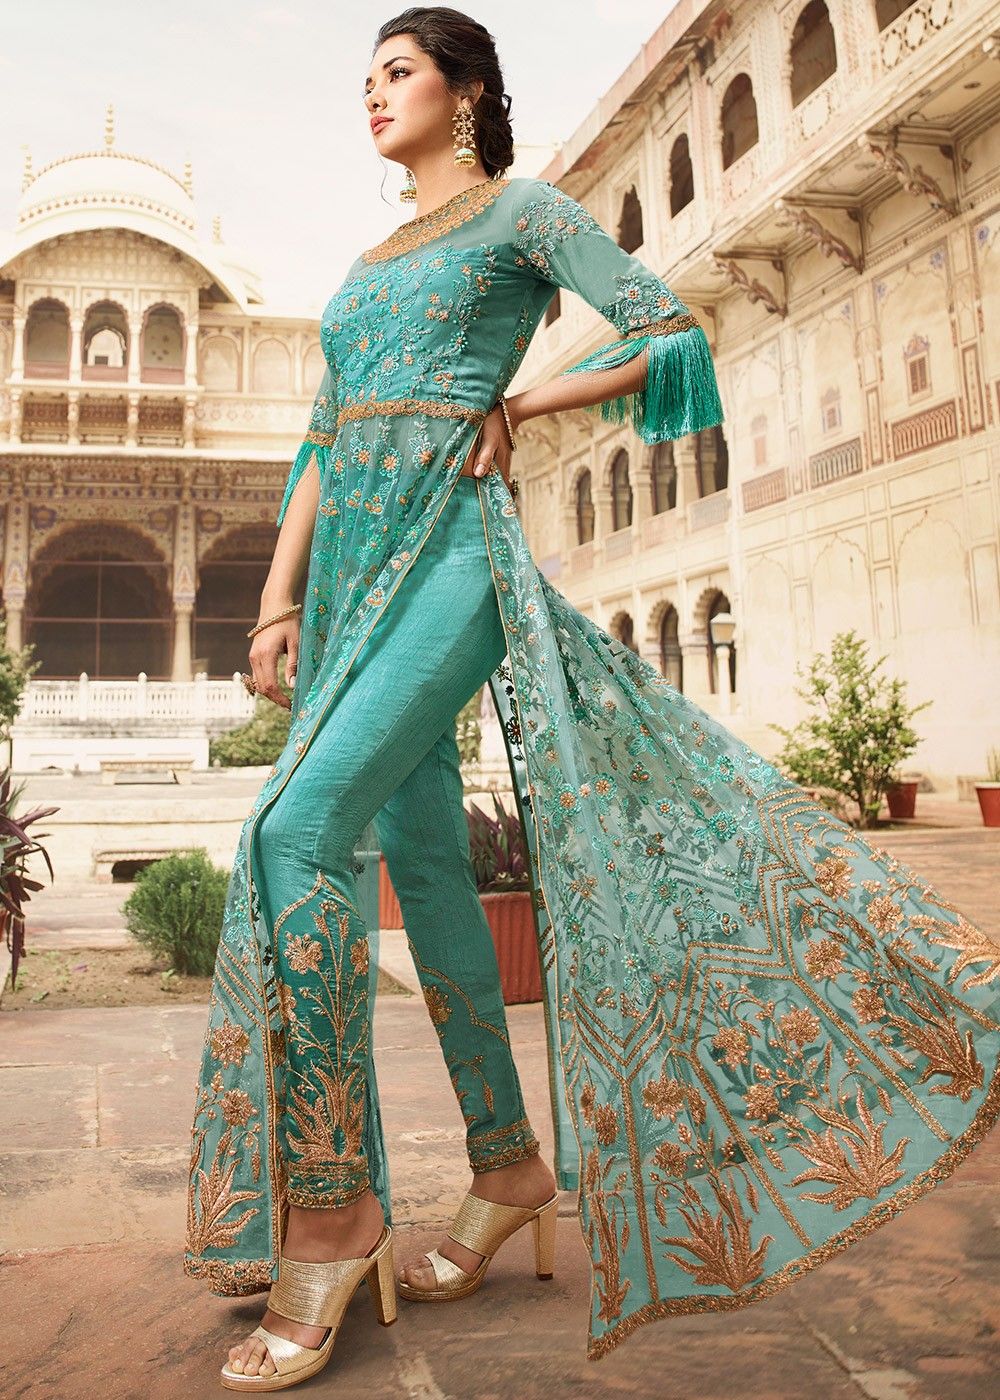 Latest 50 Net Salwar Suit Designs For Women 2022